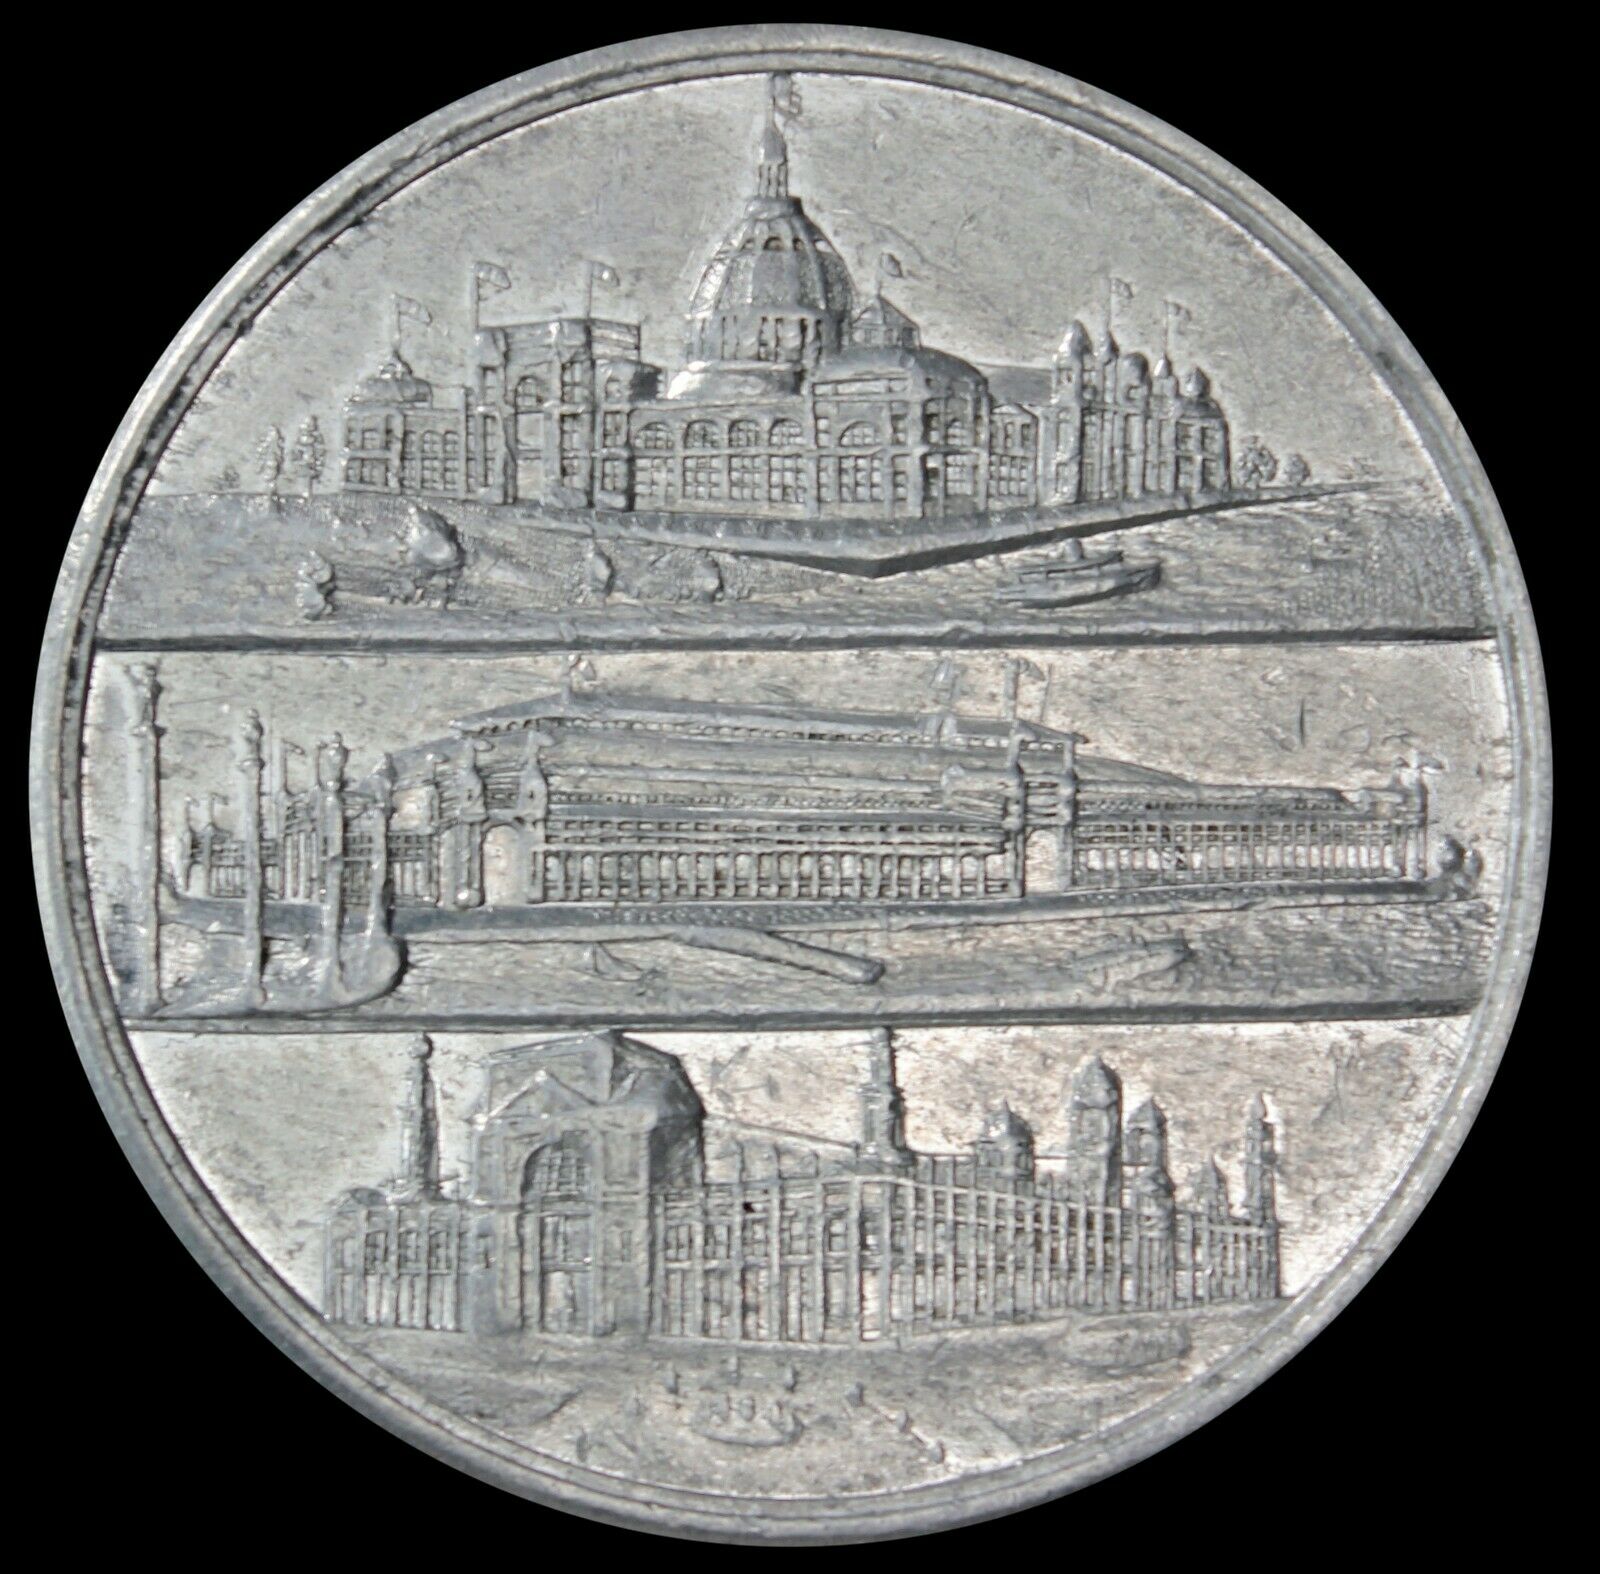 Hk 204 So-called Dollar World’s Columbian Exposition Palace Dollar – 1892